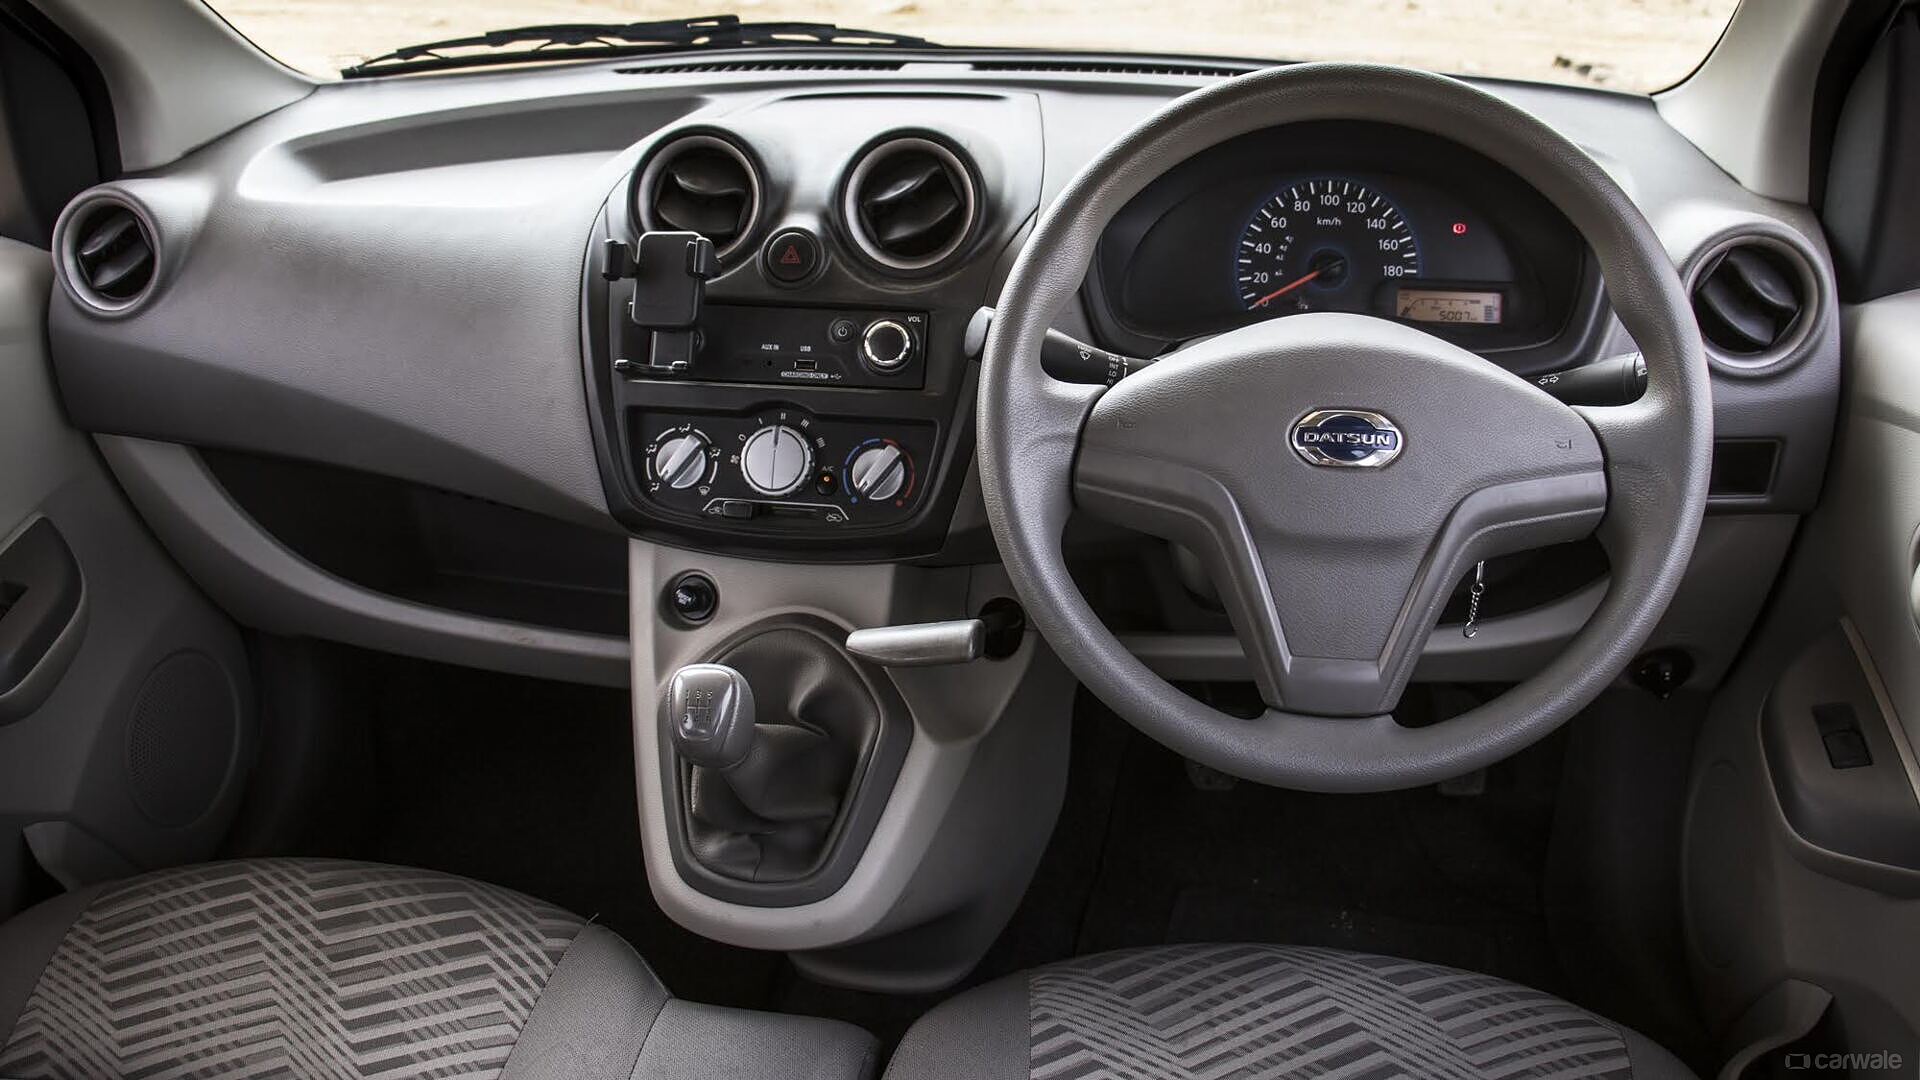  Datsun  GO  Plus Photo Interior  Image CarWale